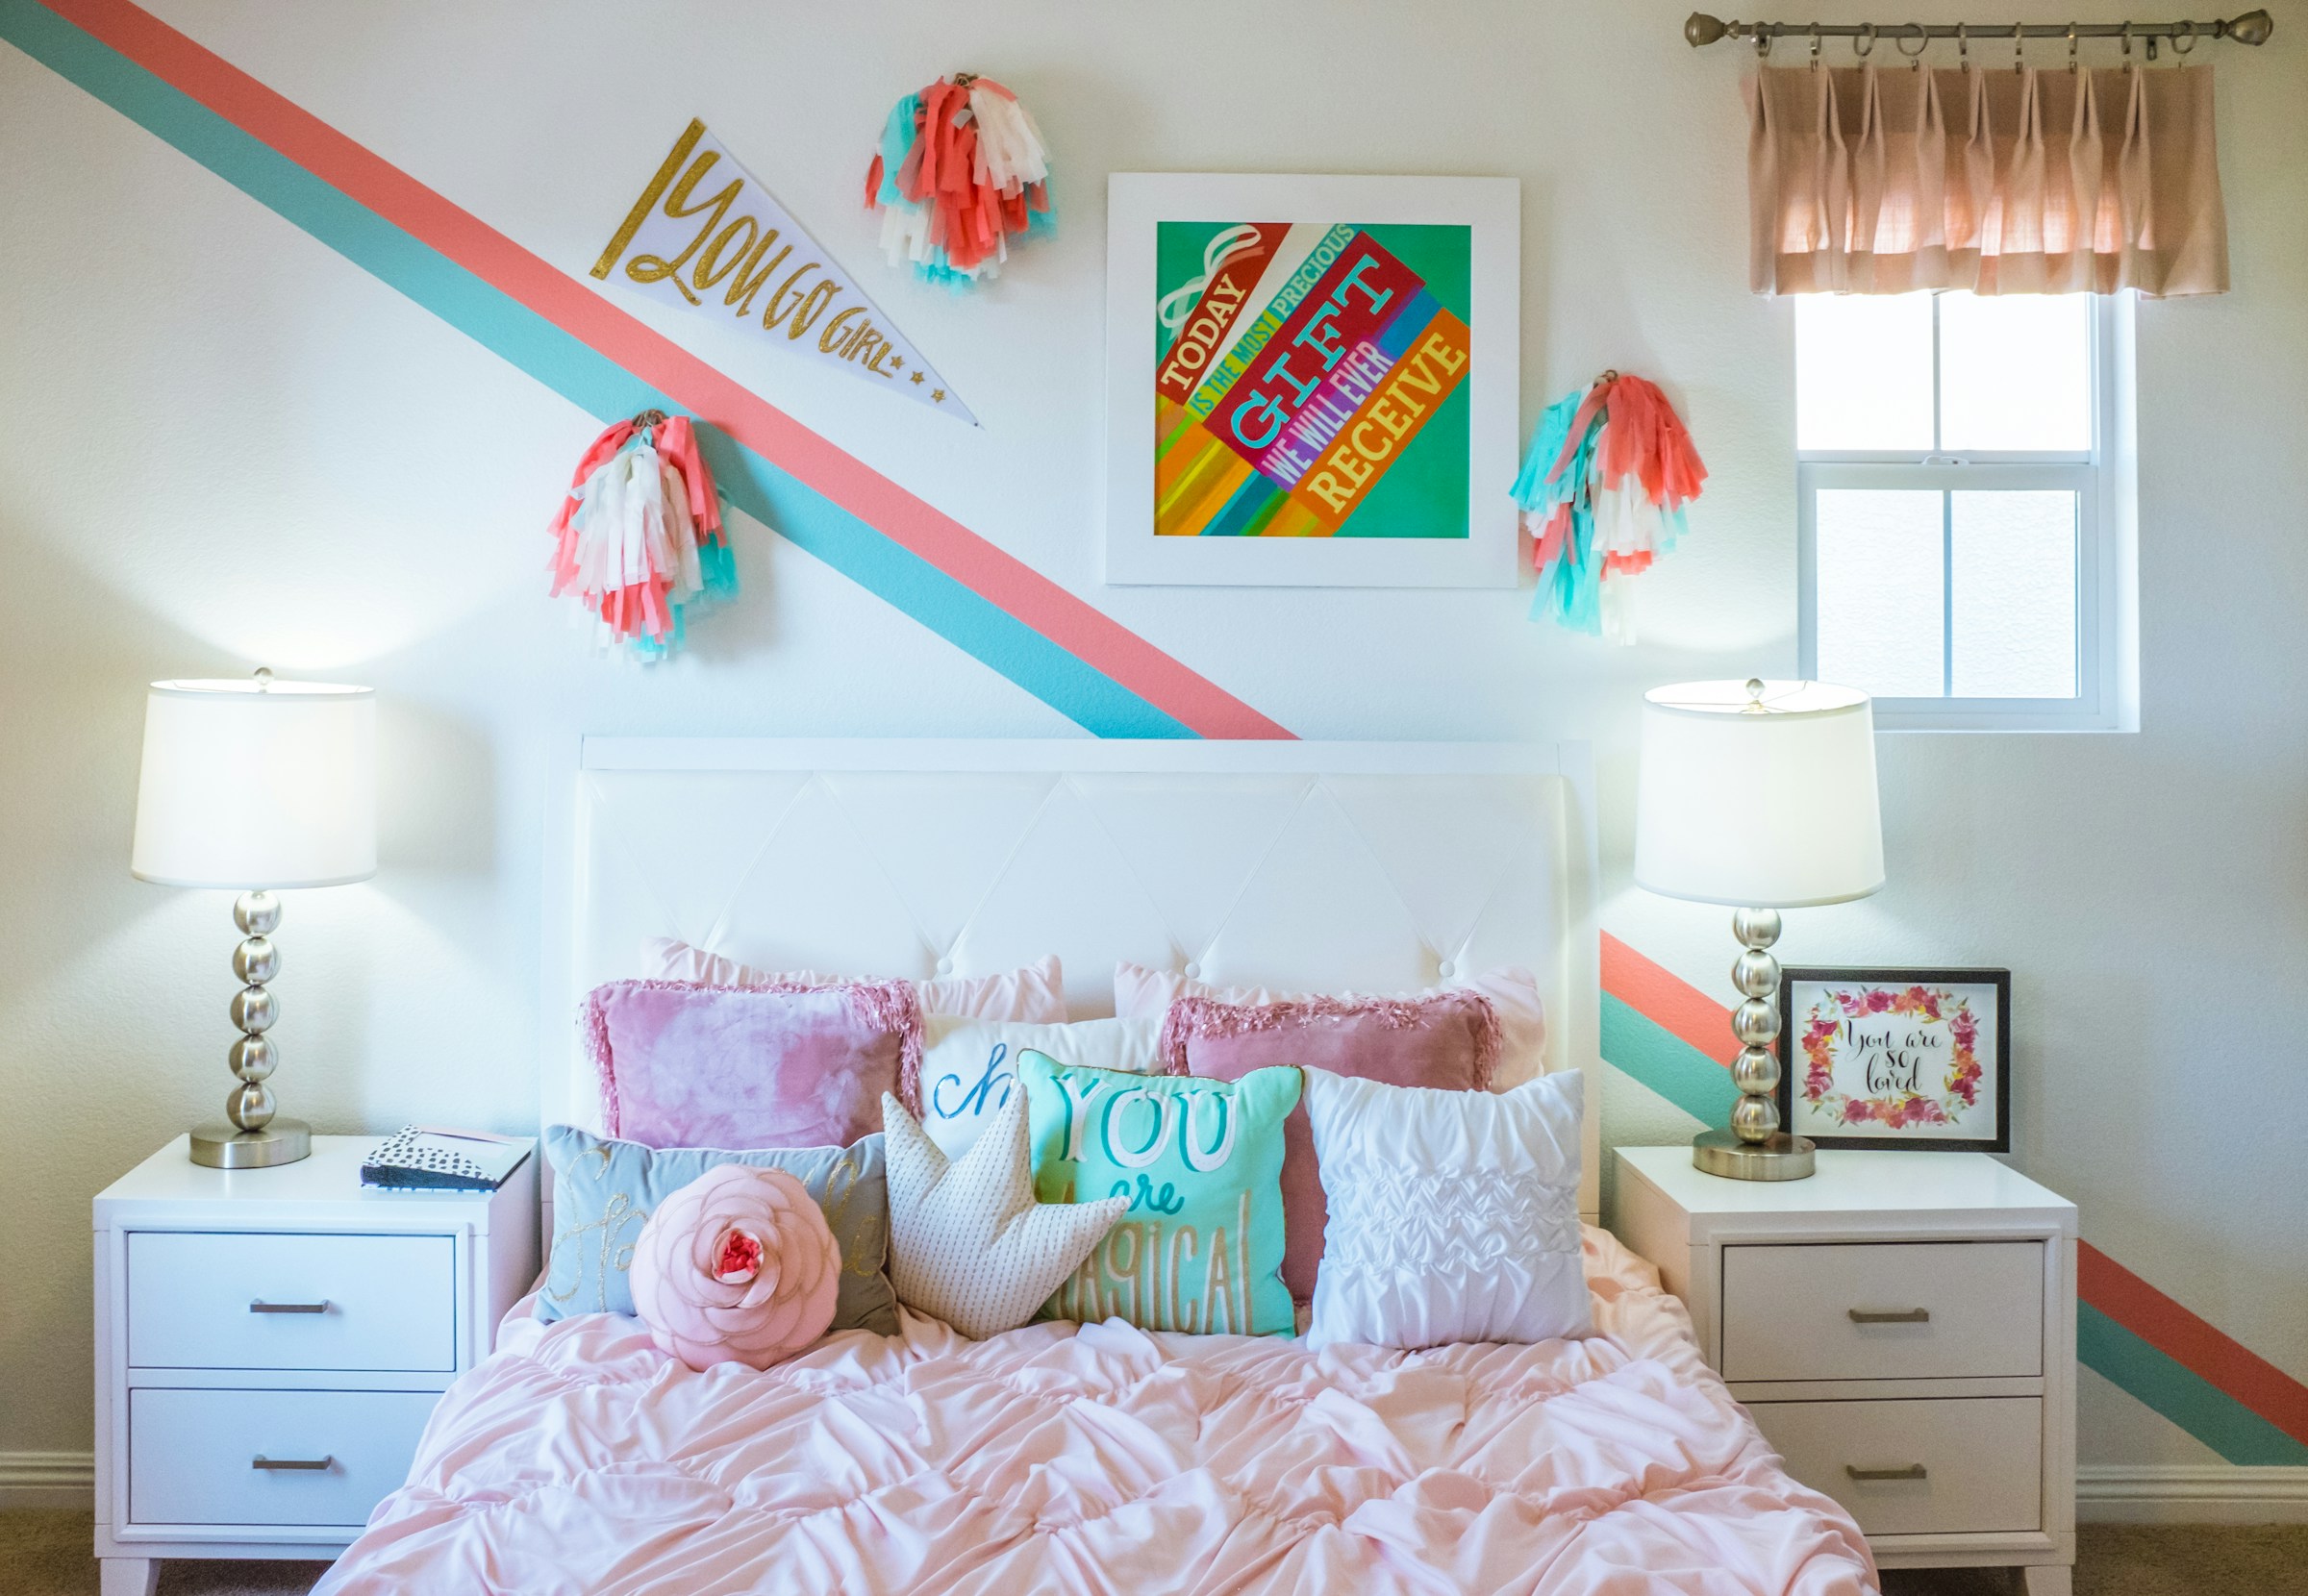 Young girl's bedroom | Source: Unsplash